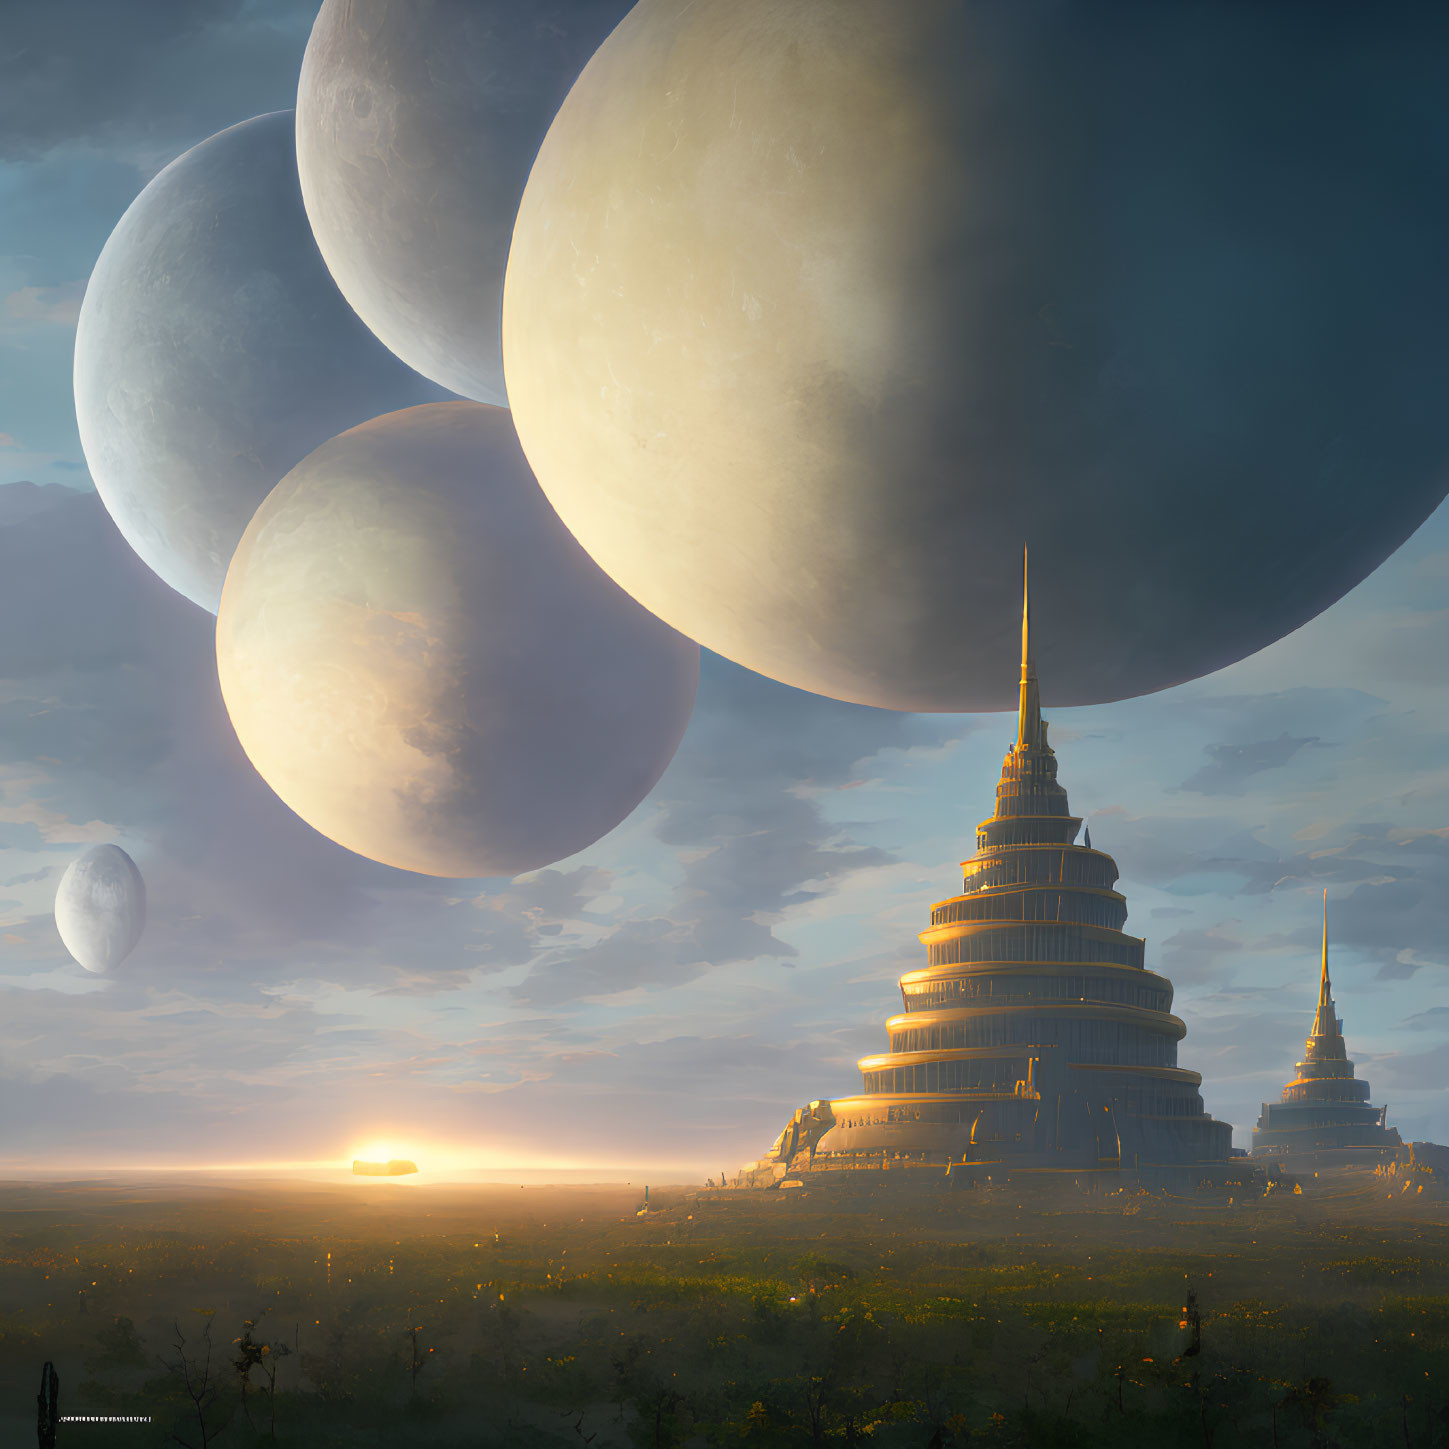 Futuristic pagoda structures under celestial bodies in serene sci-fi landscape